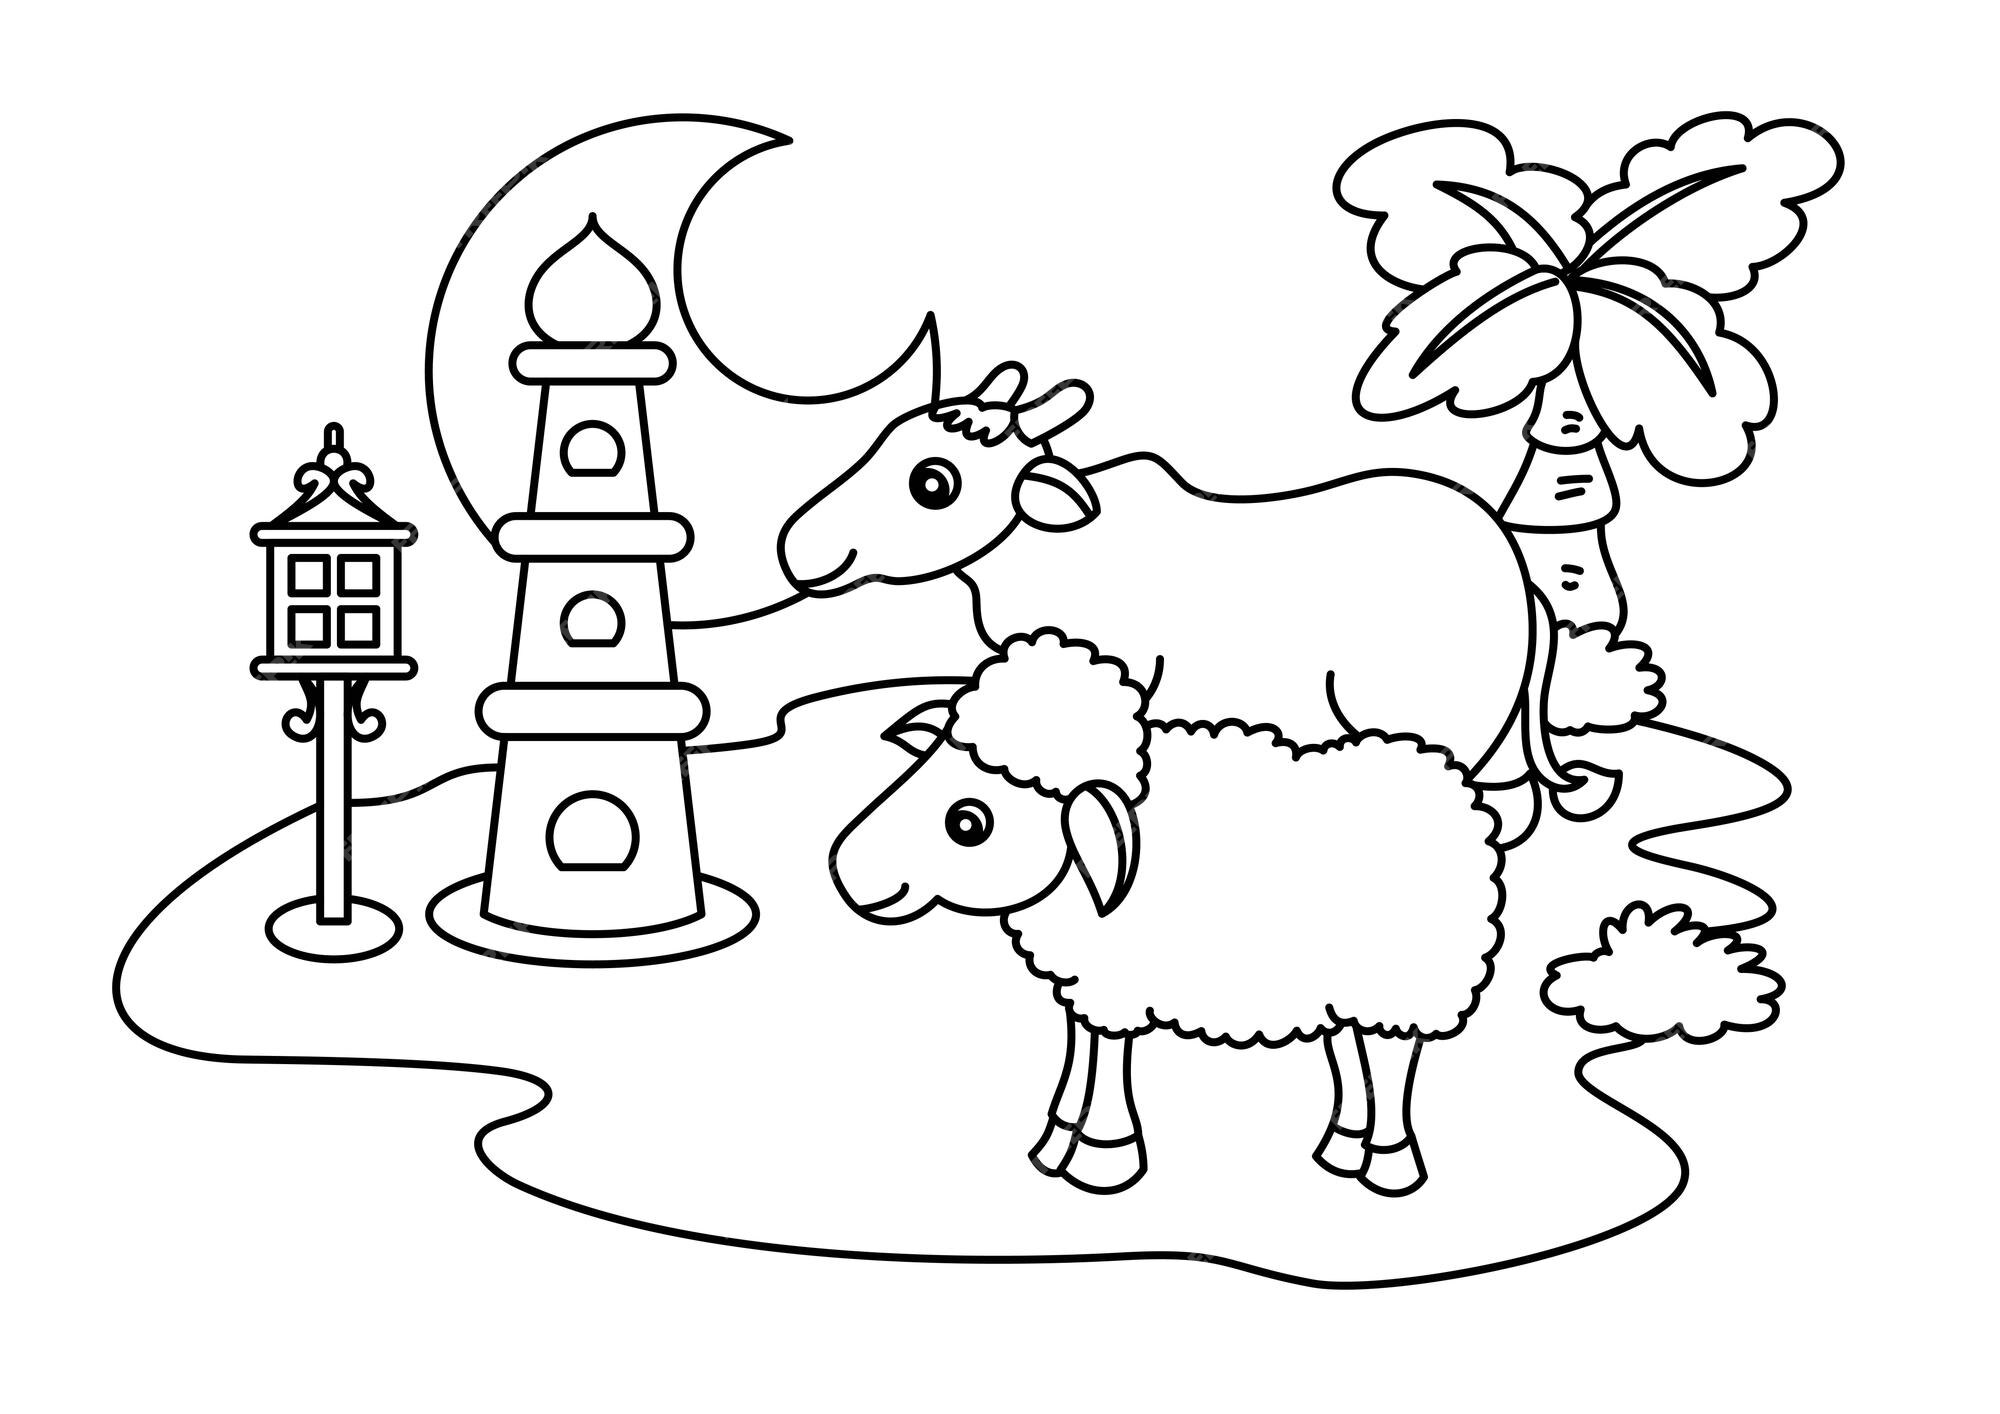 Goat coloring Vectors & Illustrations for Free Download   Freepik